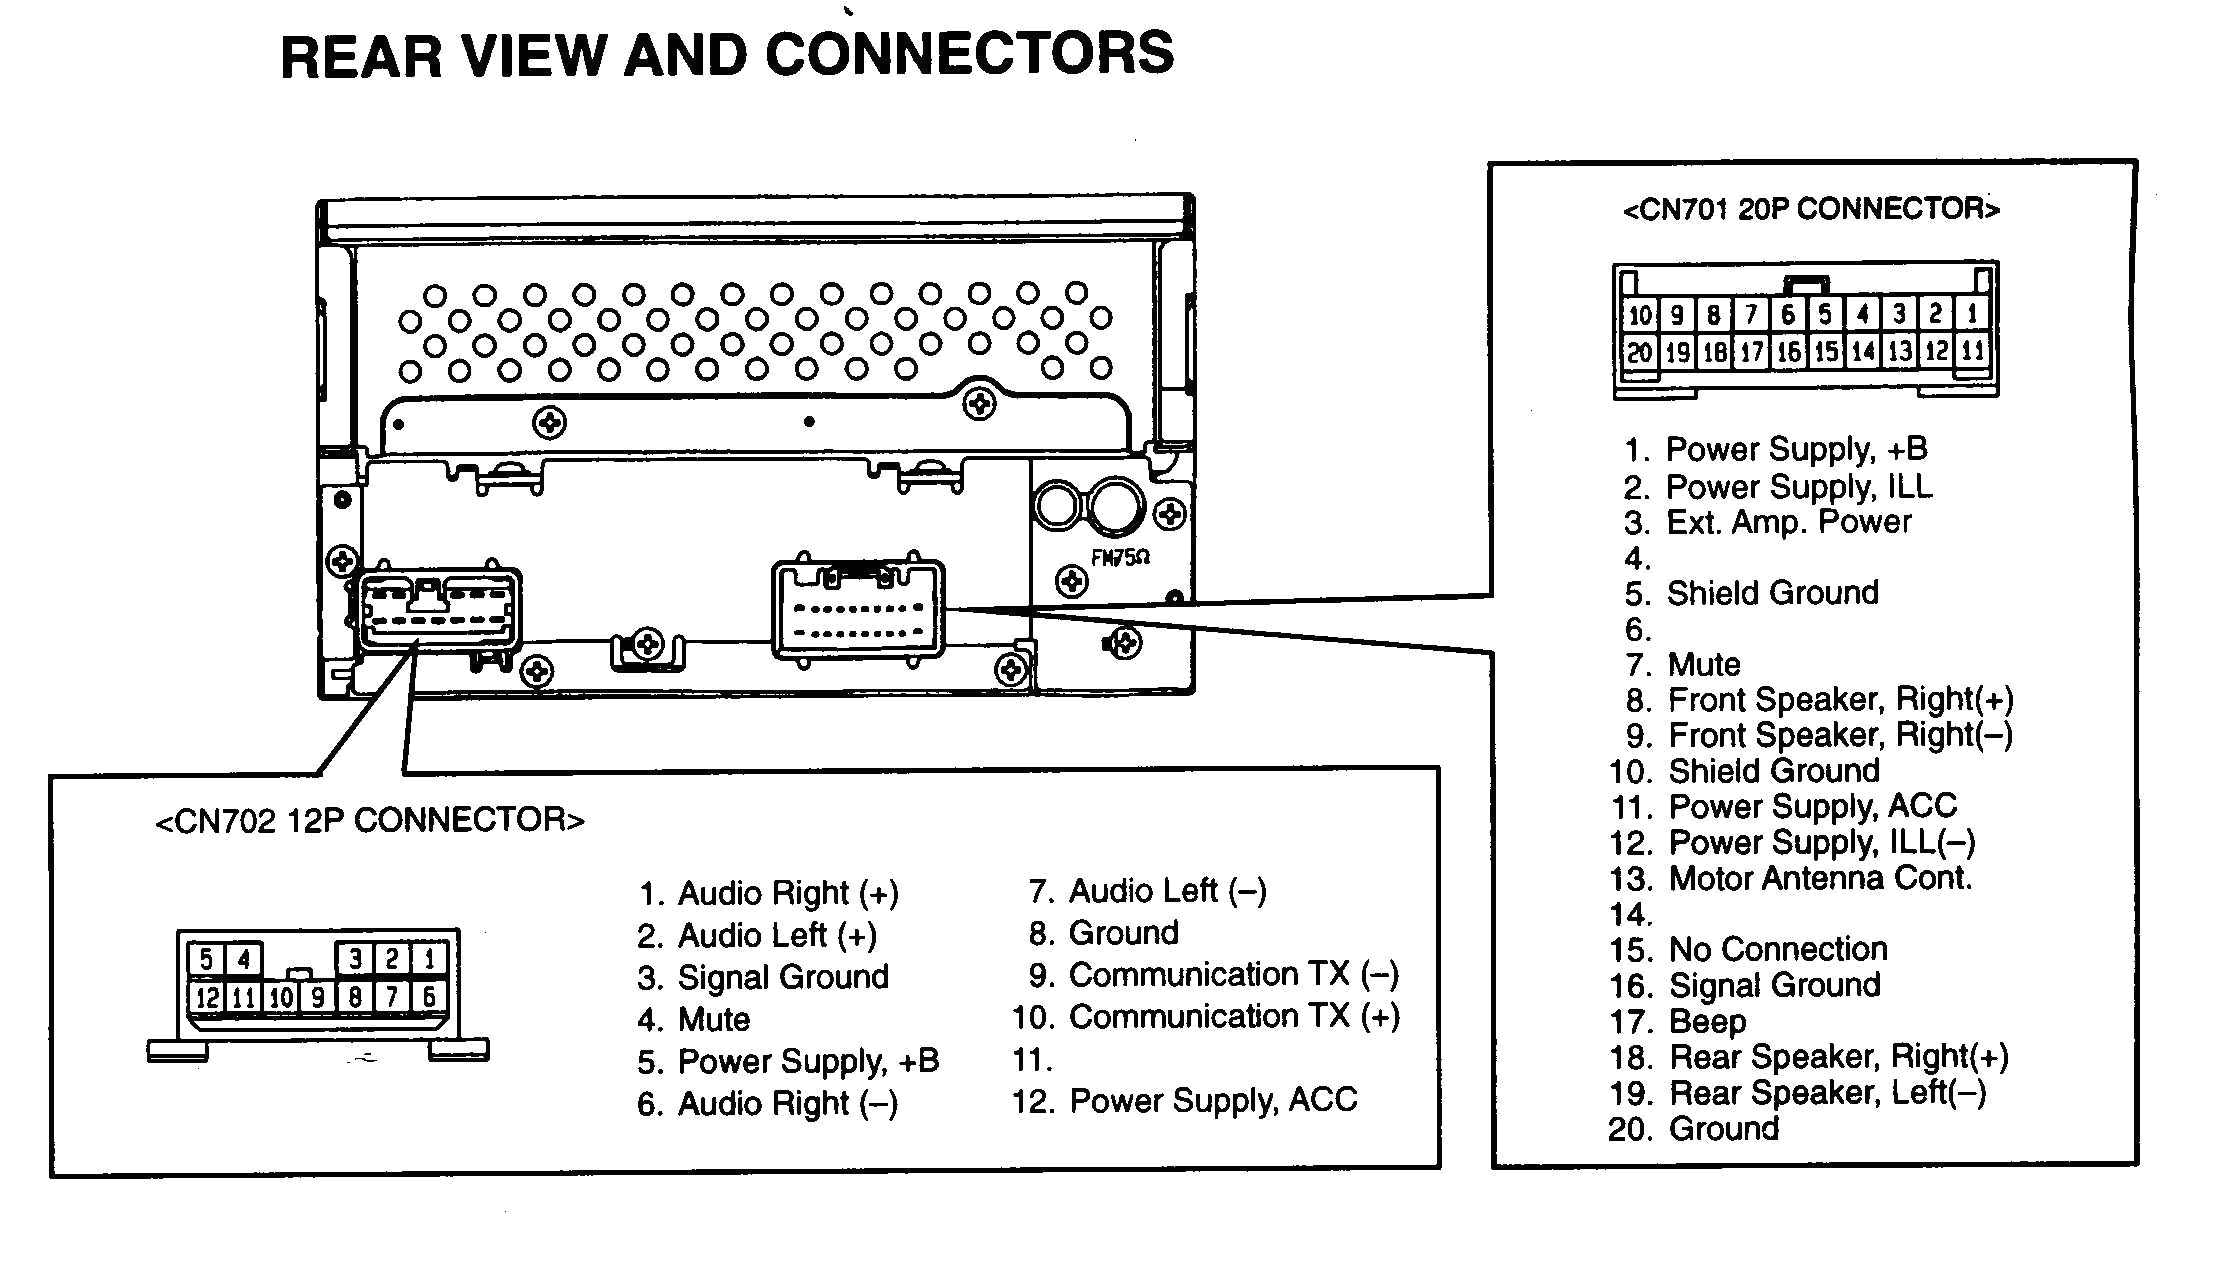 aiwa wiring diagram wiring diagramaiwa stereo wiring harness diagram wiring diagram article reviewaiwa stereo wiring diagram